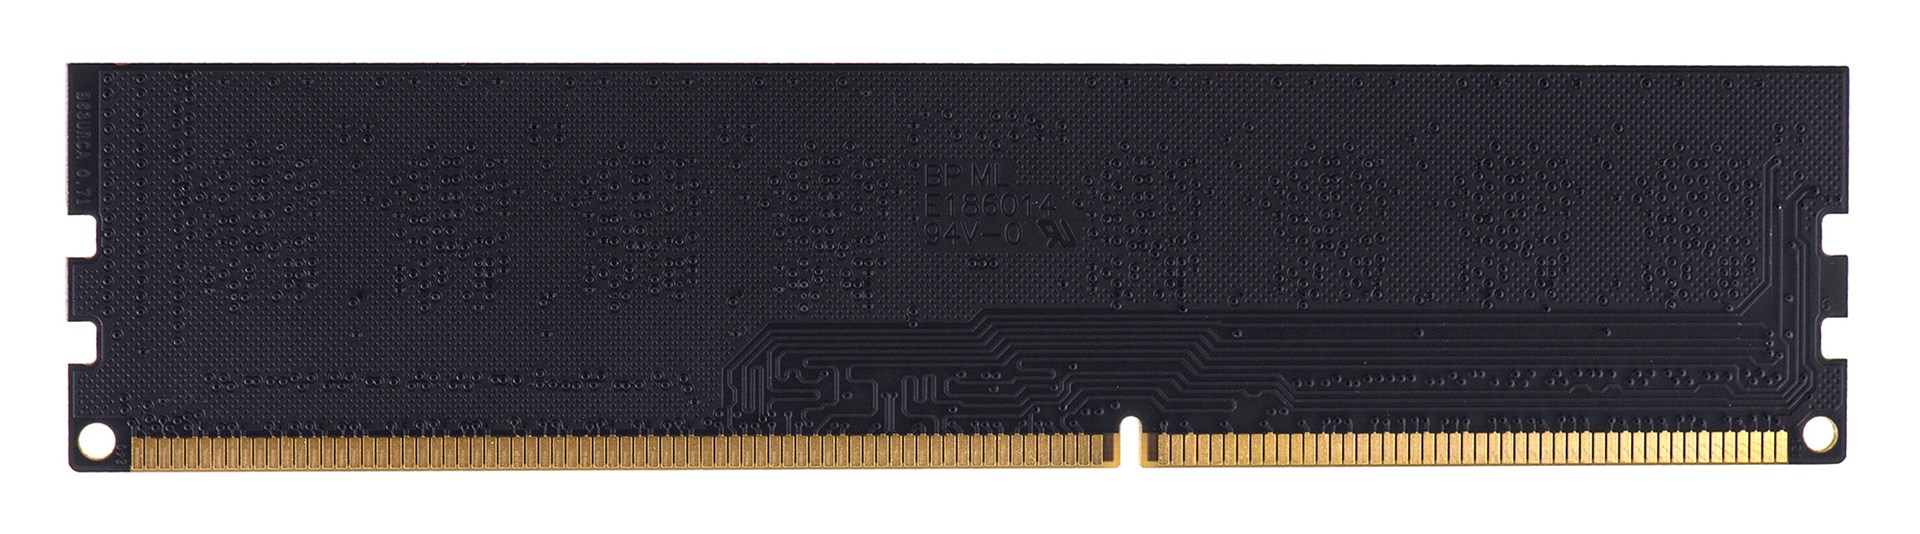 G.Skill 2GB DDR3-1333 NS paměťový modul 1333 MHz